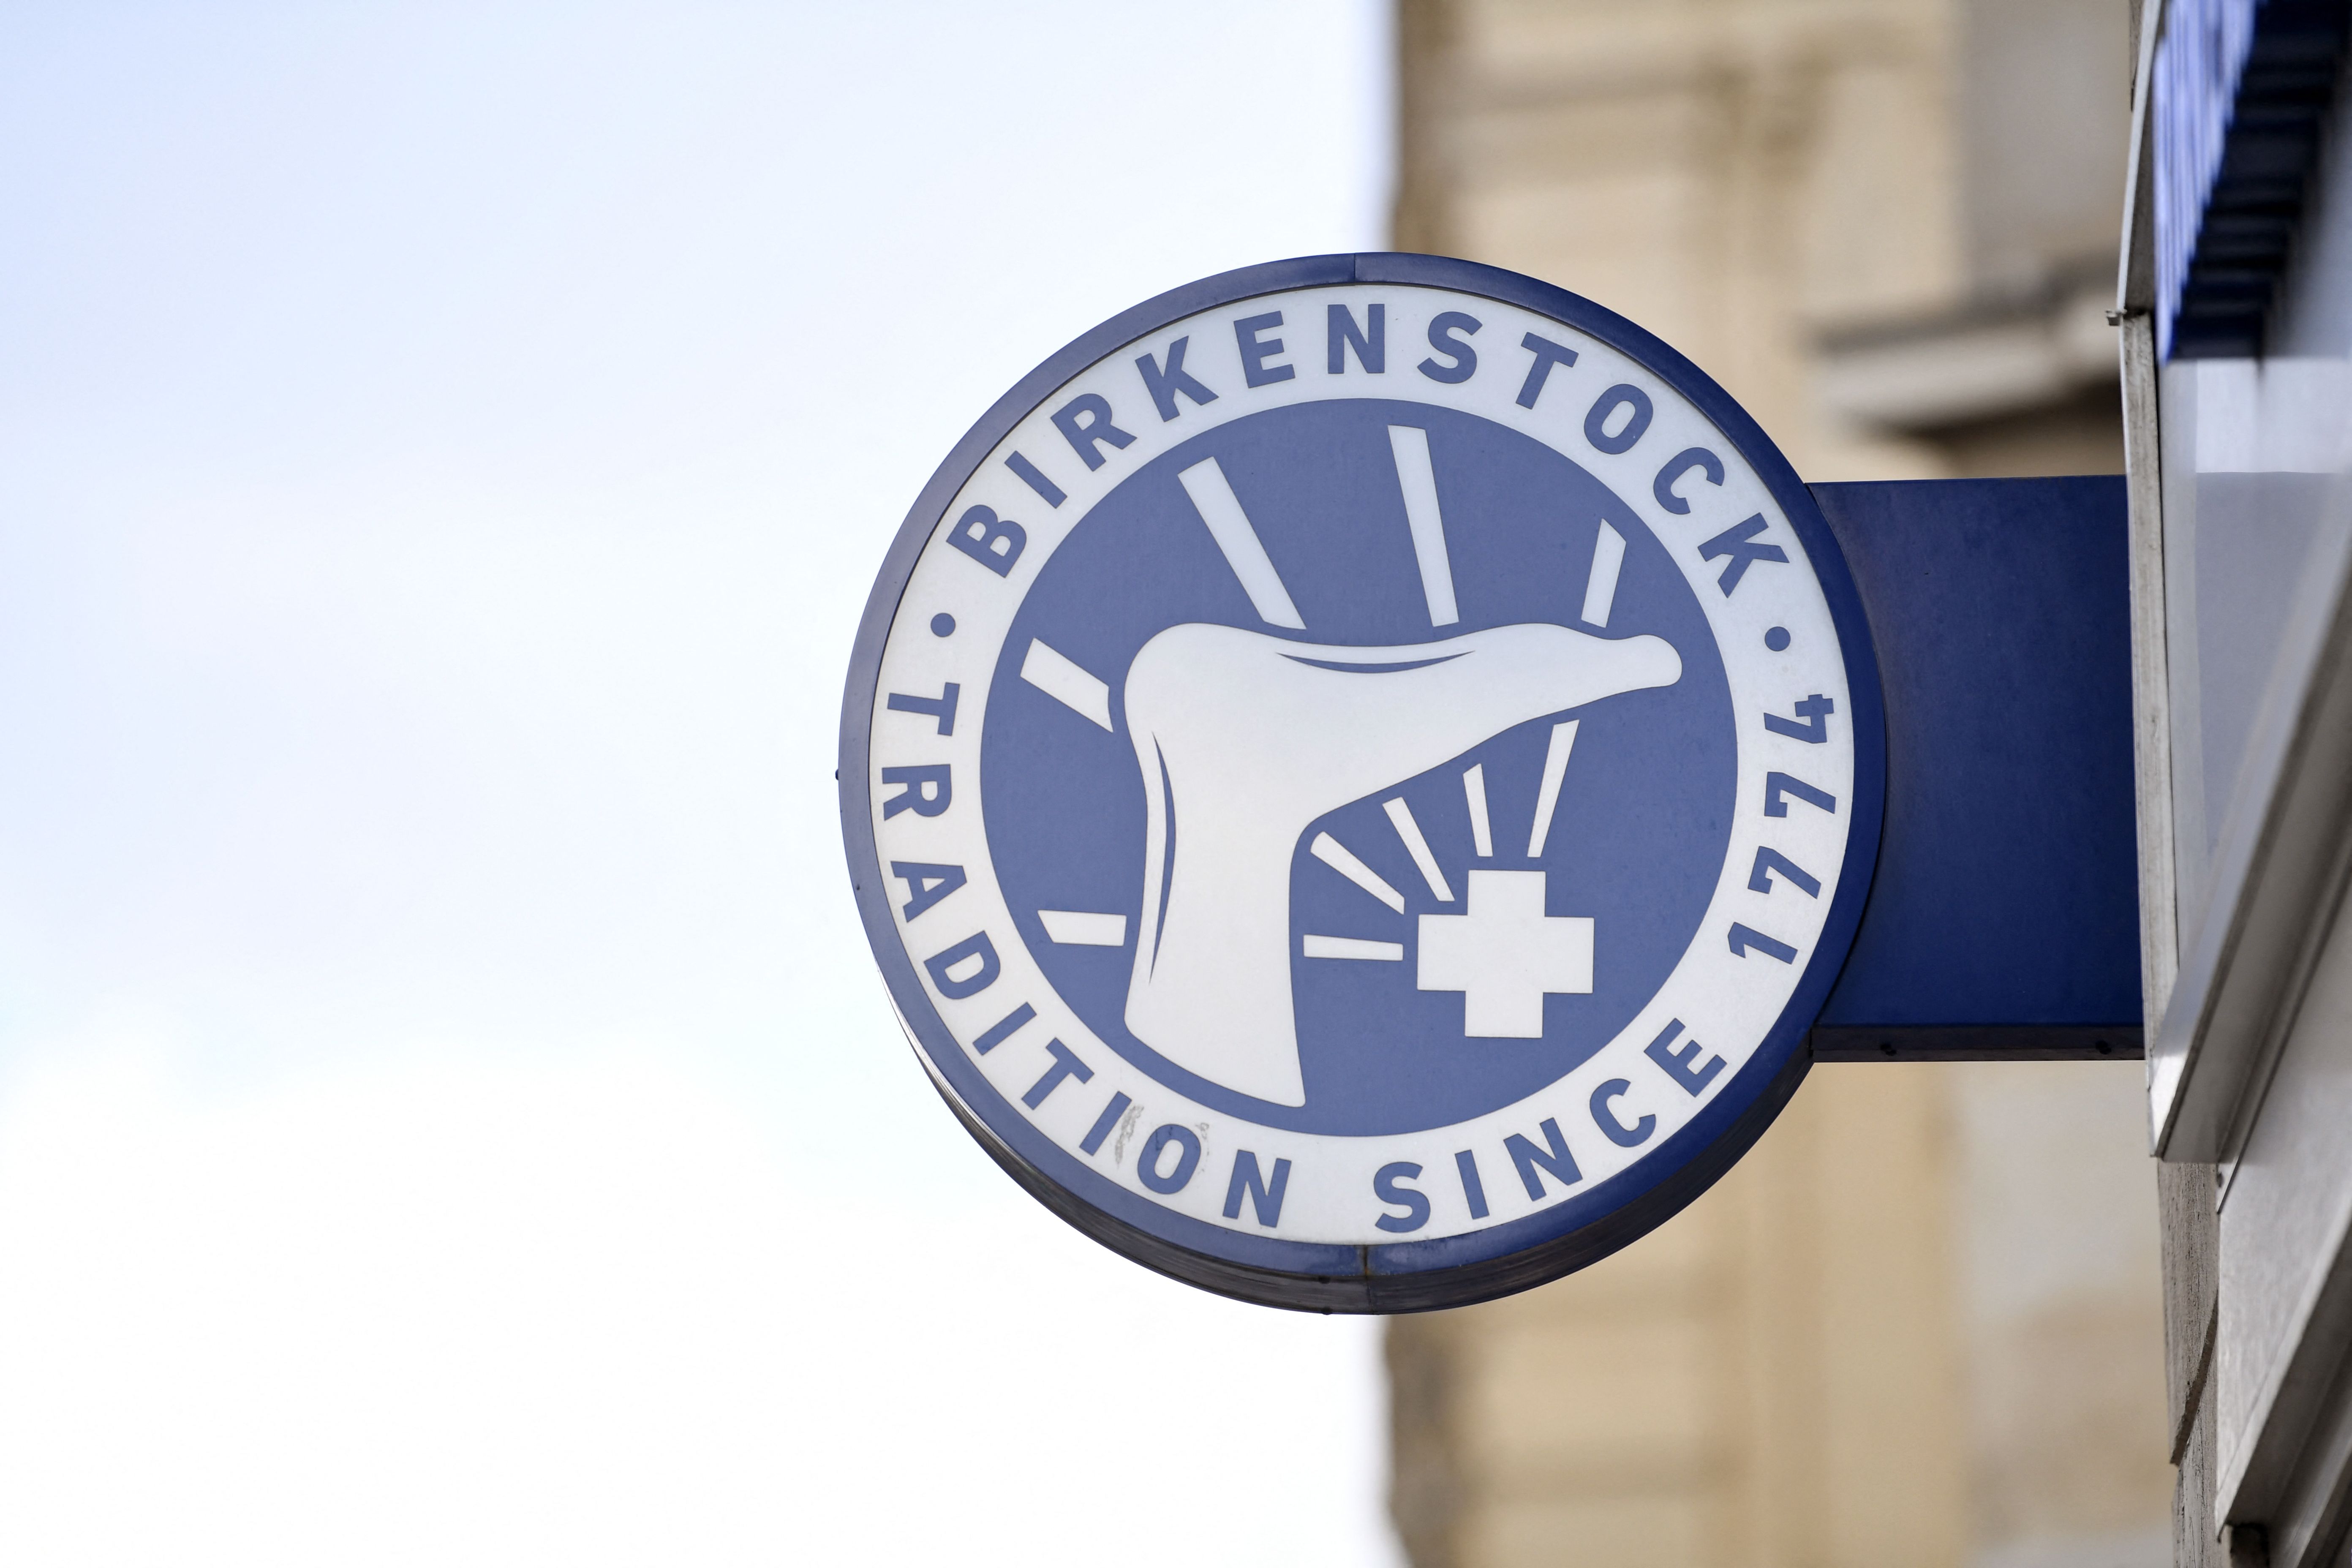 €4bn Birkenstock sells majority stake to L Catterton - Euro